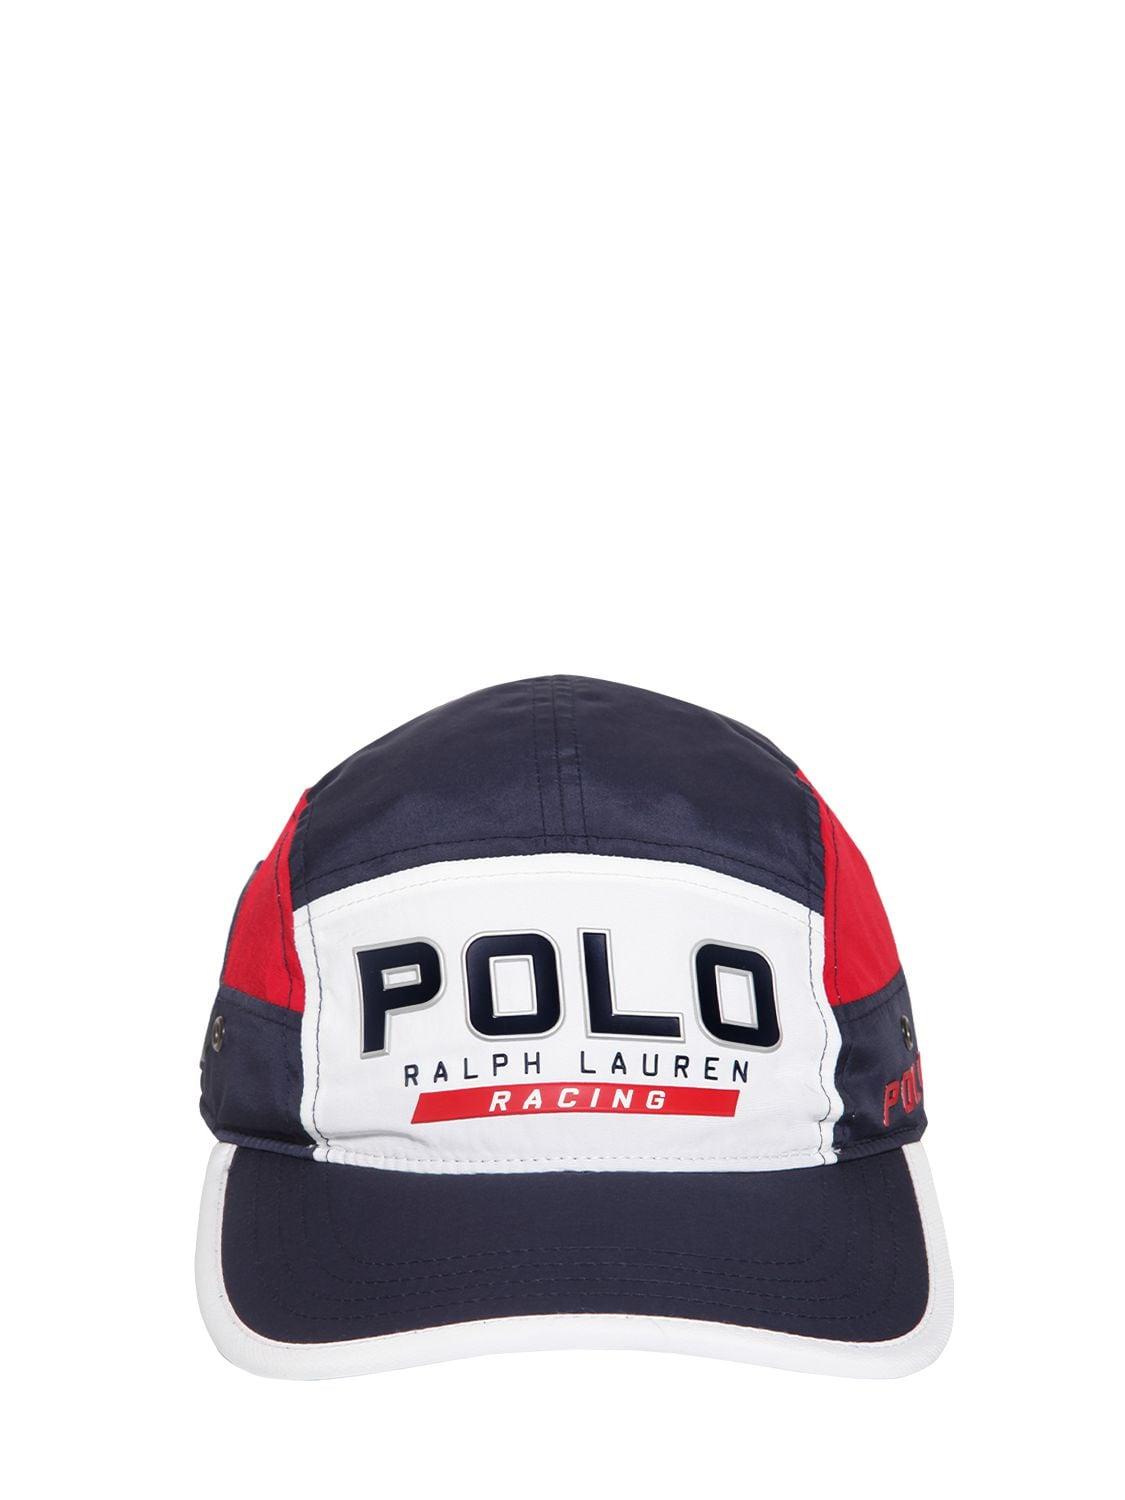 Polo Ralph Lauren P1 Logo Color Block Hat in Navy/White/Red (Blue) for Men  - Lyst